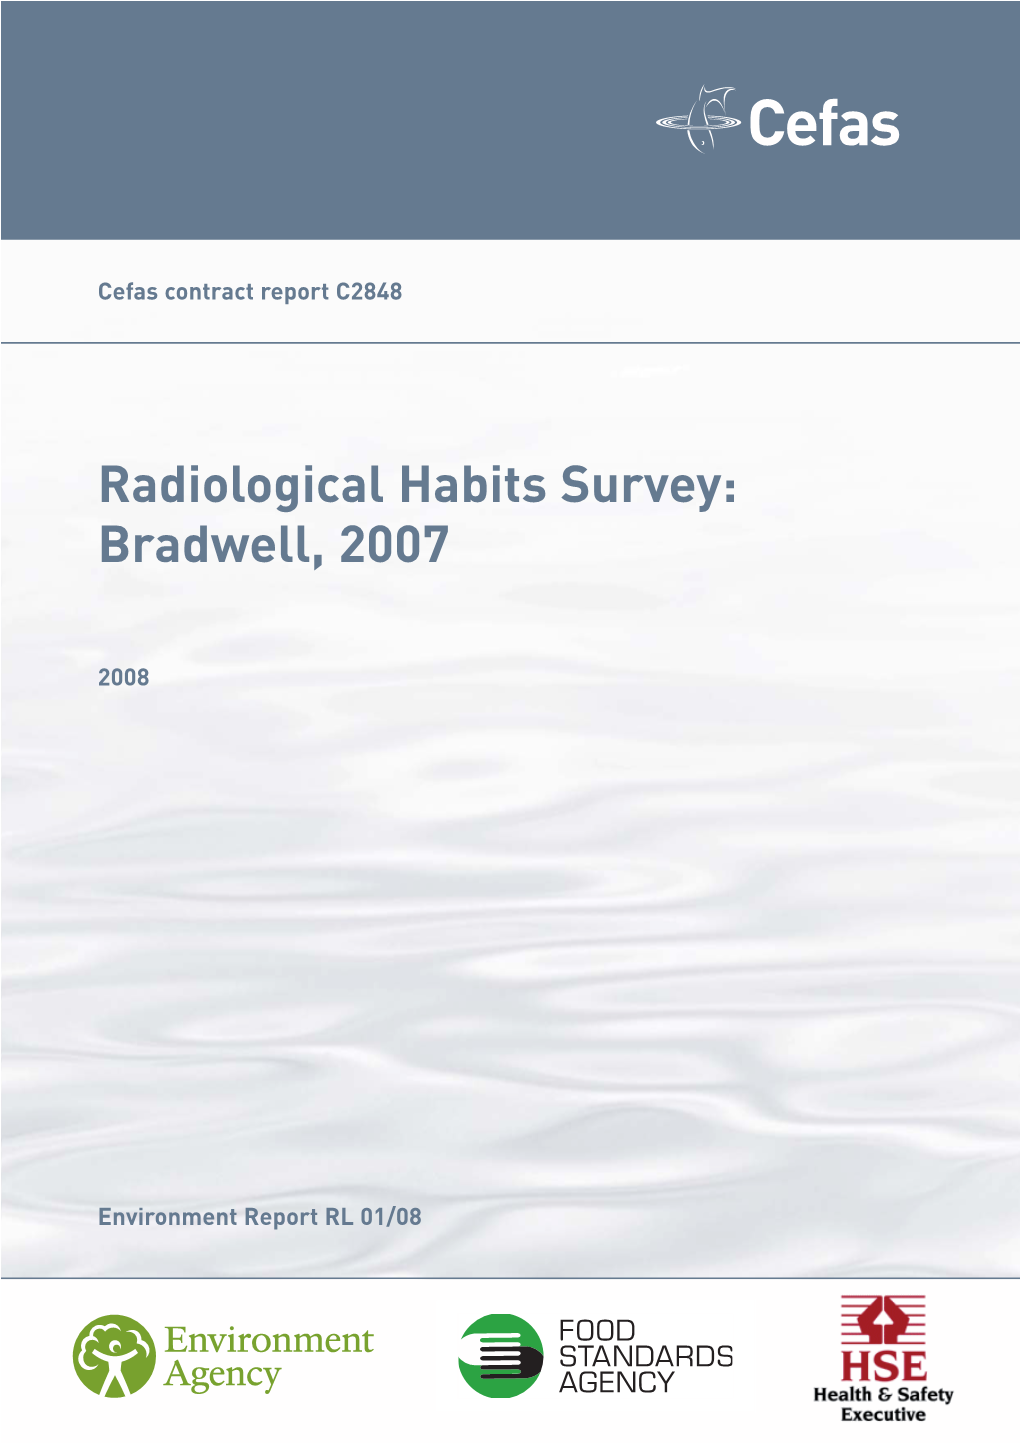 Radiological Habits Survey: Bradwell, 2007